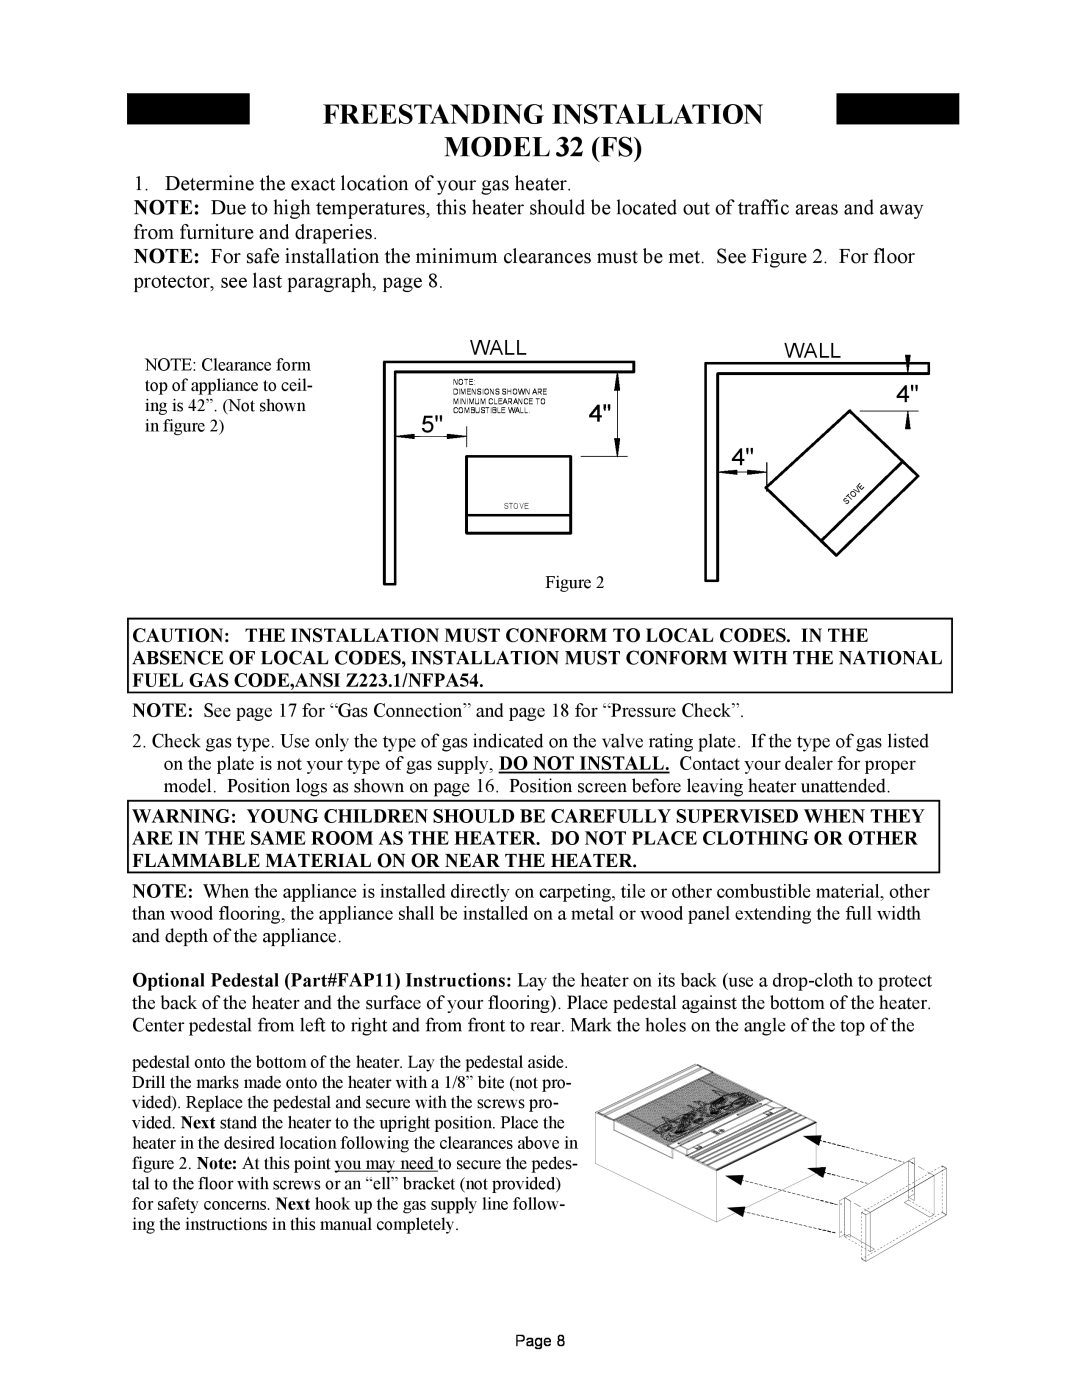 New Buck Corporation manual FREESTANDING INSTALLATION MODEL 32 FS, Wall 